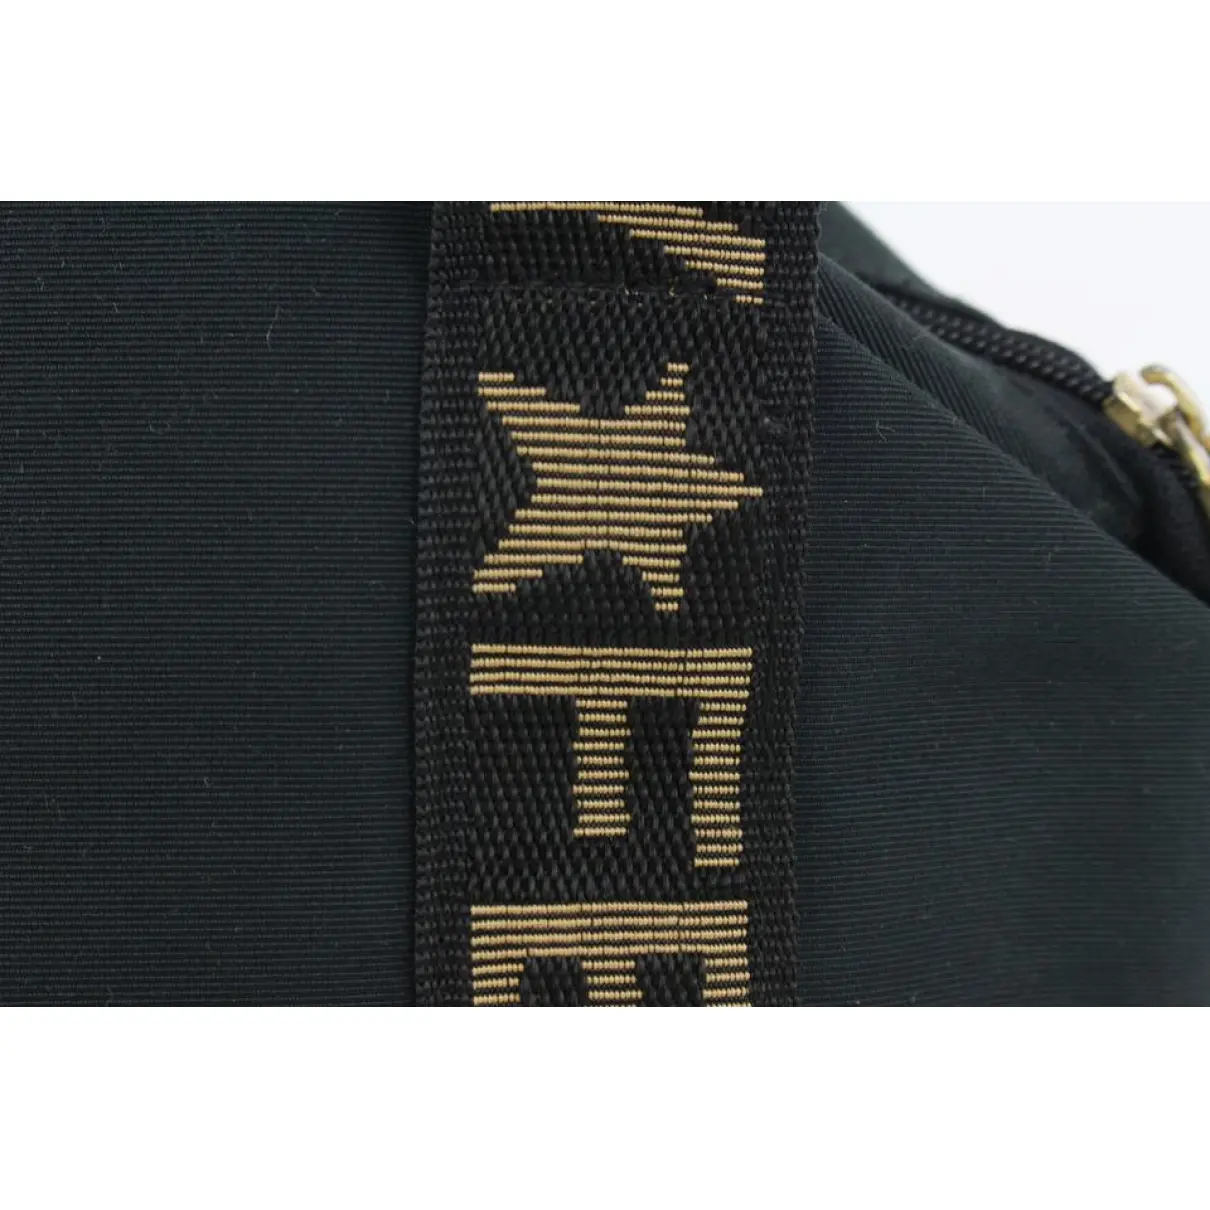 Buy Fendi Leather handbag online - Vintage